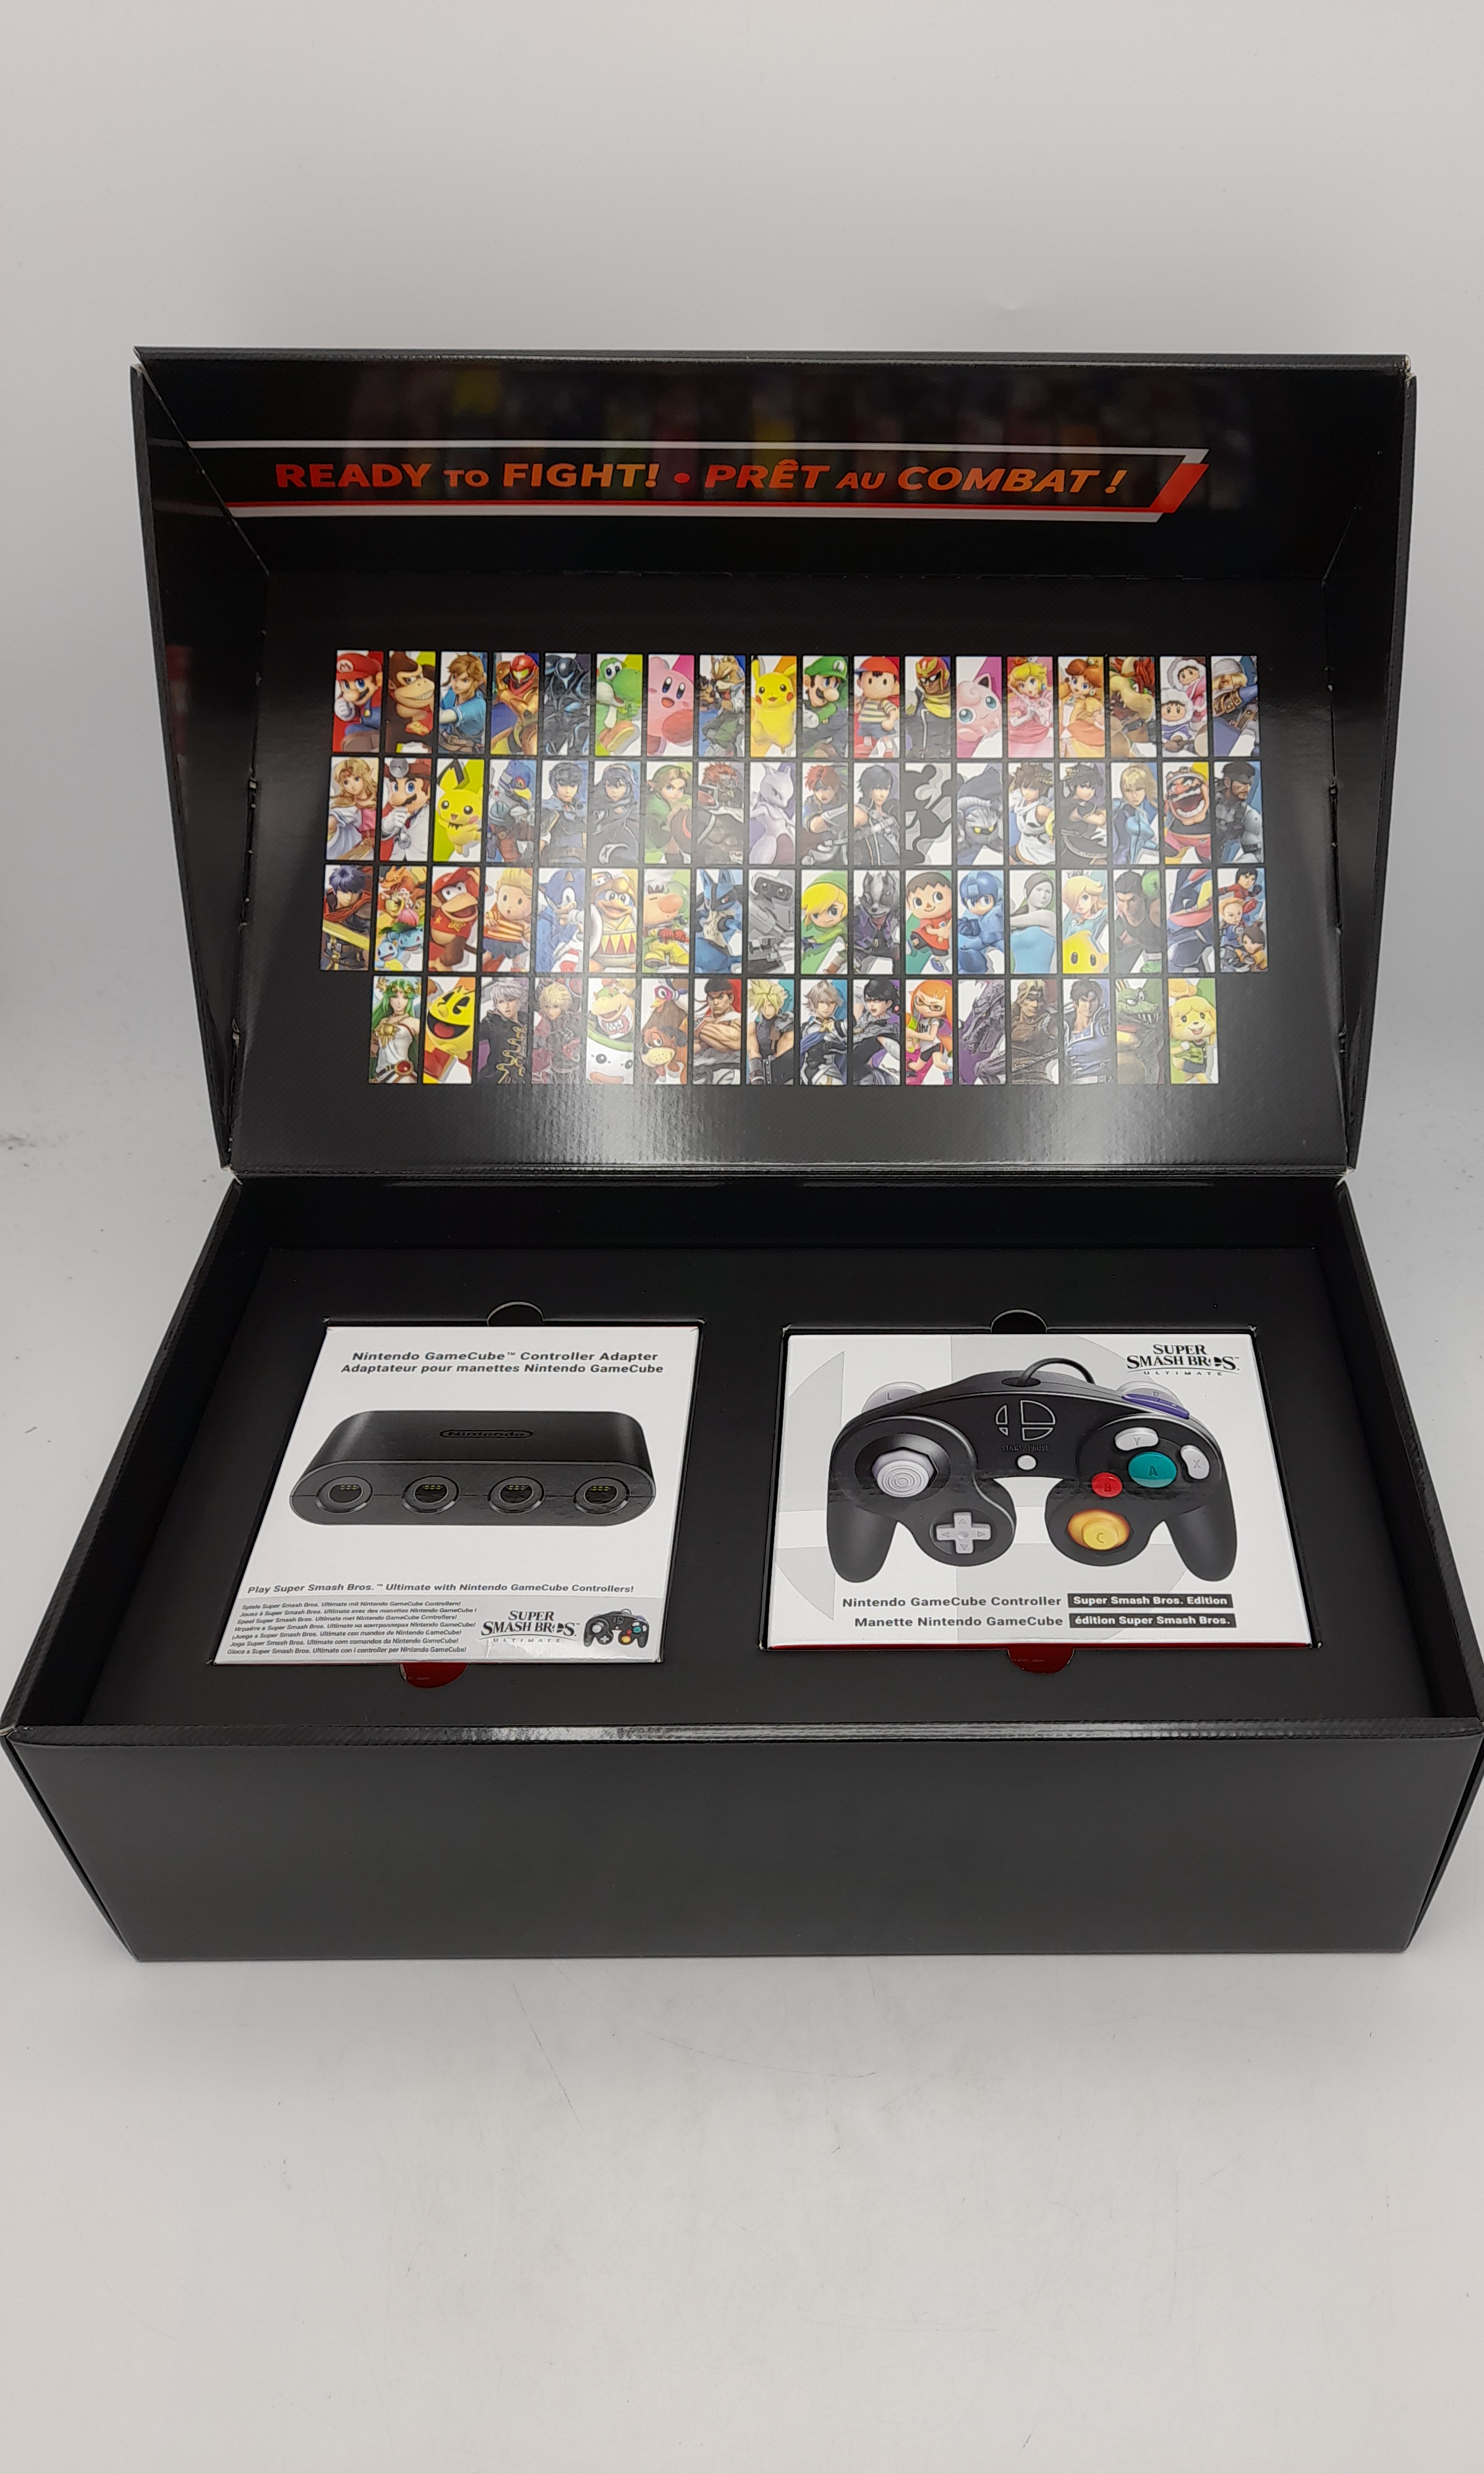 Foto van Super Smash Bros. Ultimate Limited Edition